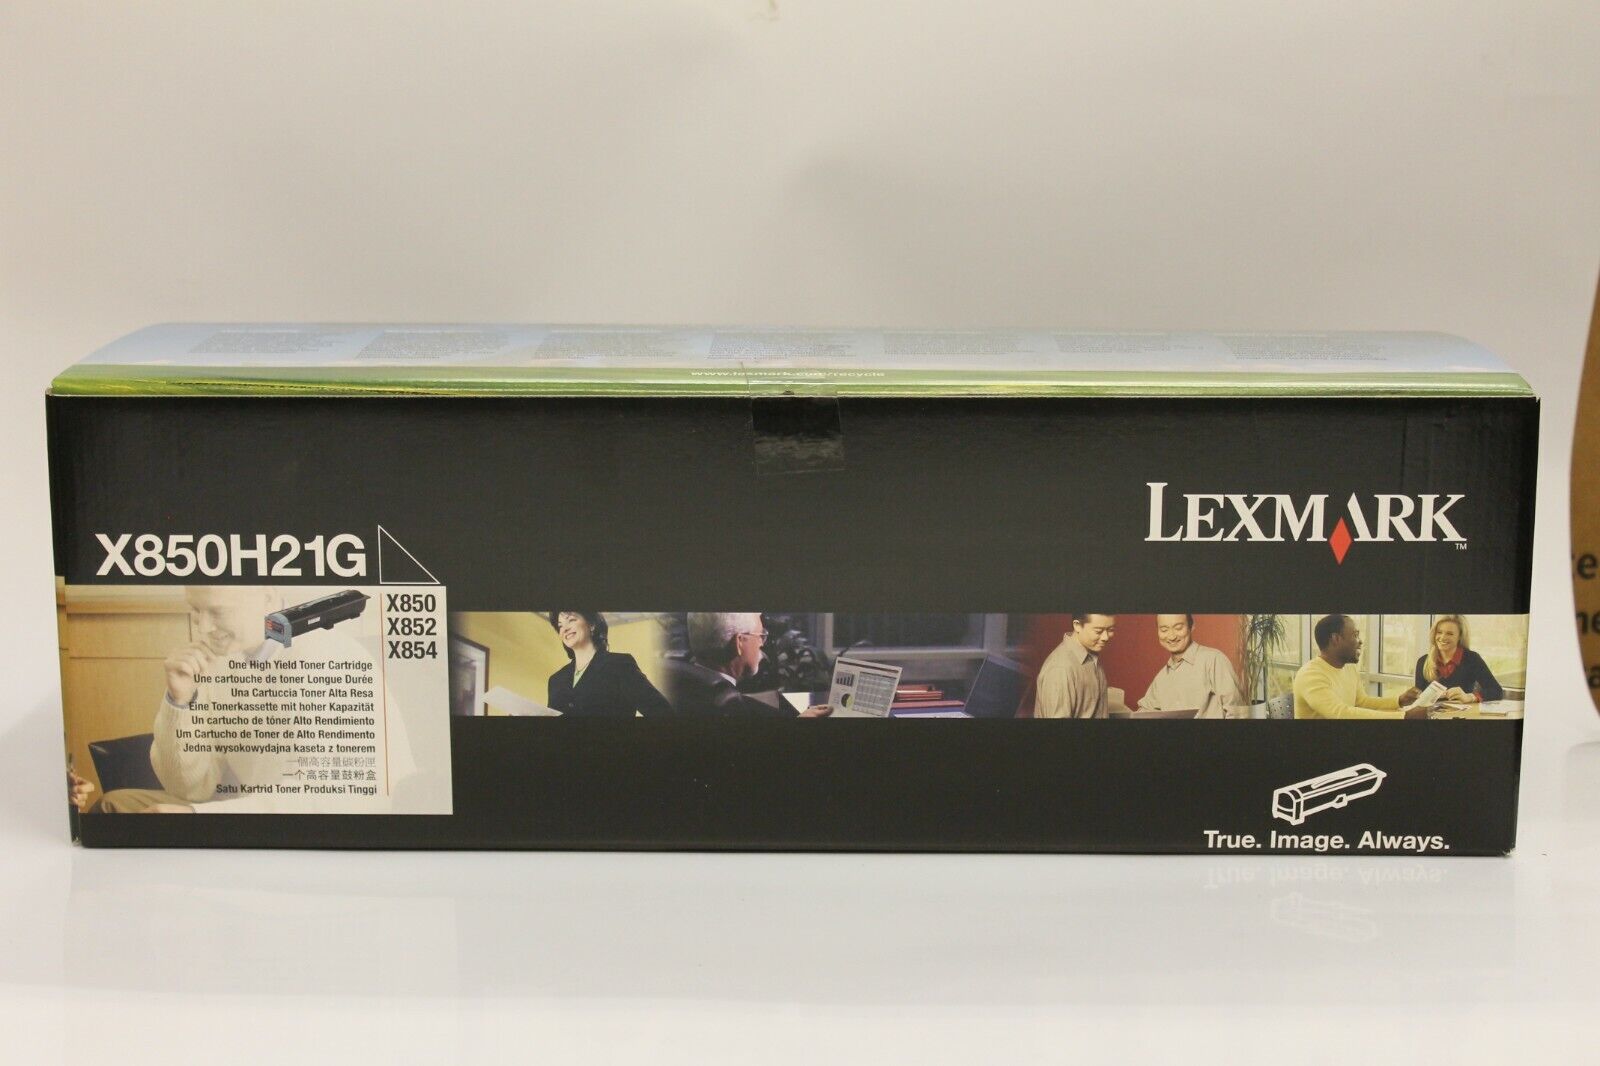 Lexmark X850H21G High Yield Toner Cartridge, Black, New and Unopened 